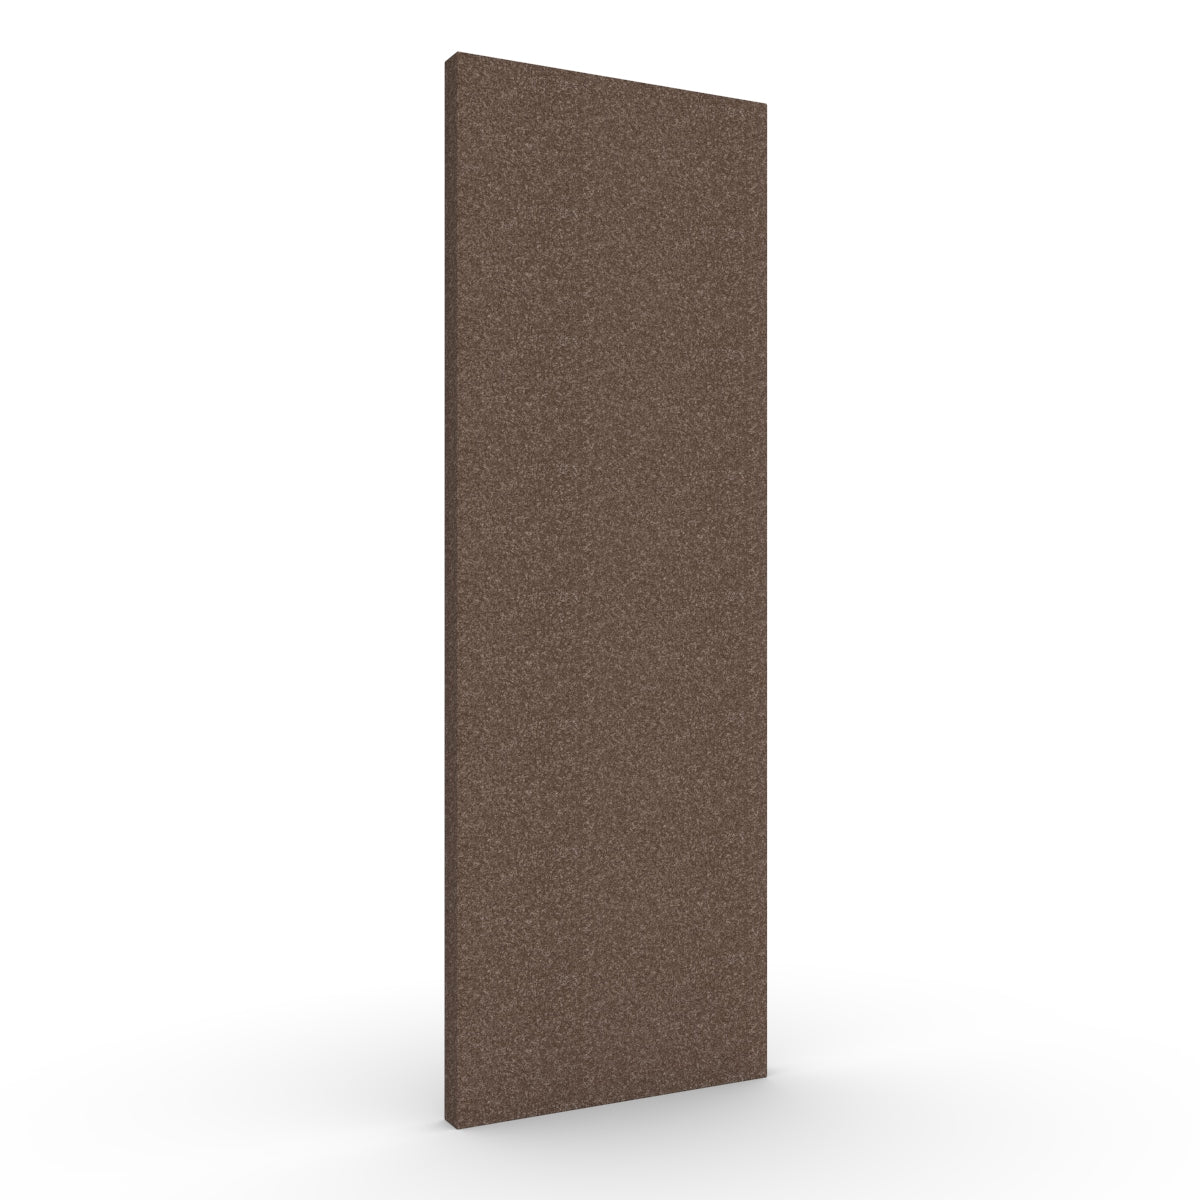 Basic wall sound absorber in brown. Size 58cmx174cm. Akustikkplater og lyddemping vegg